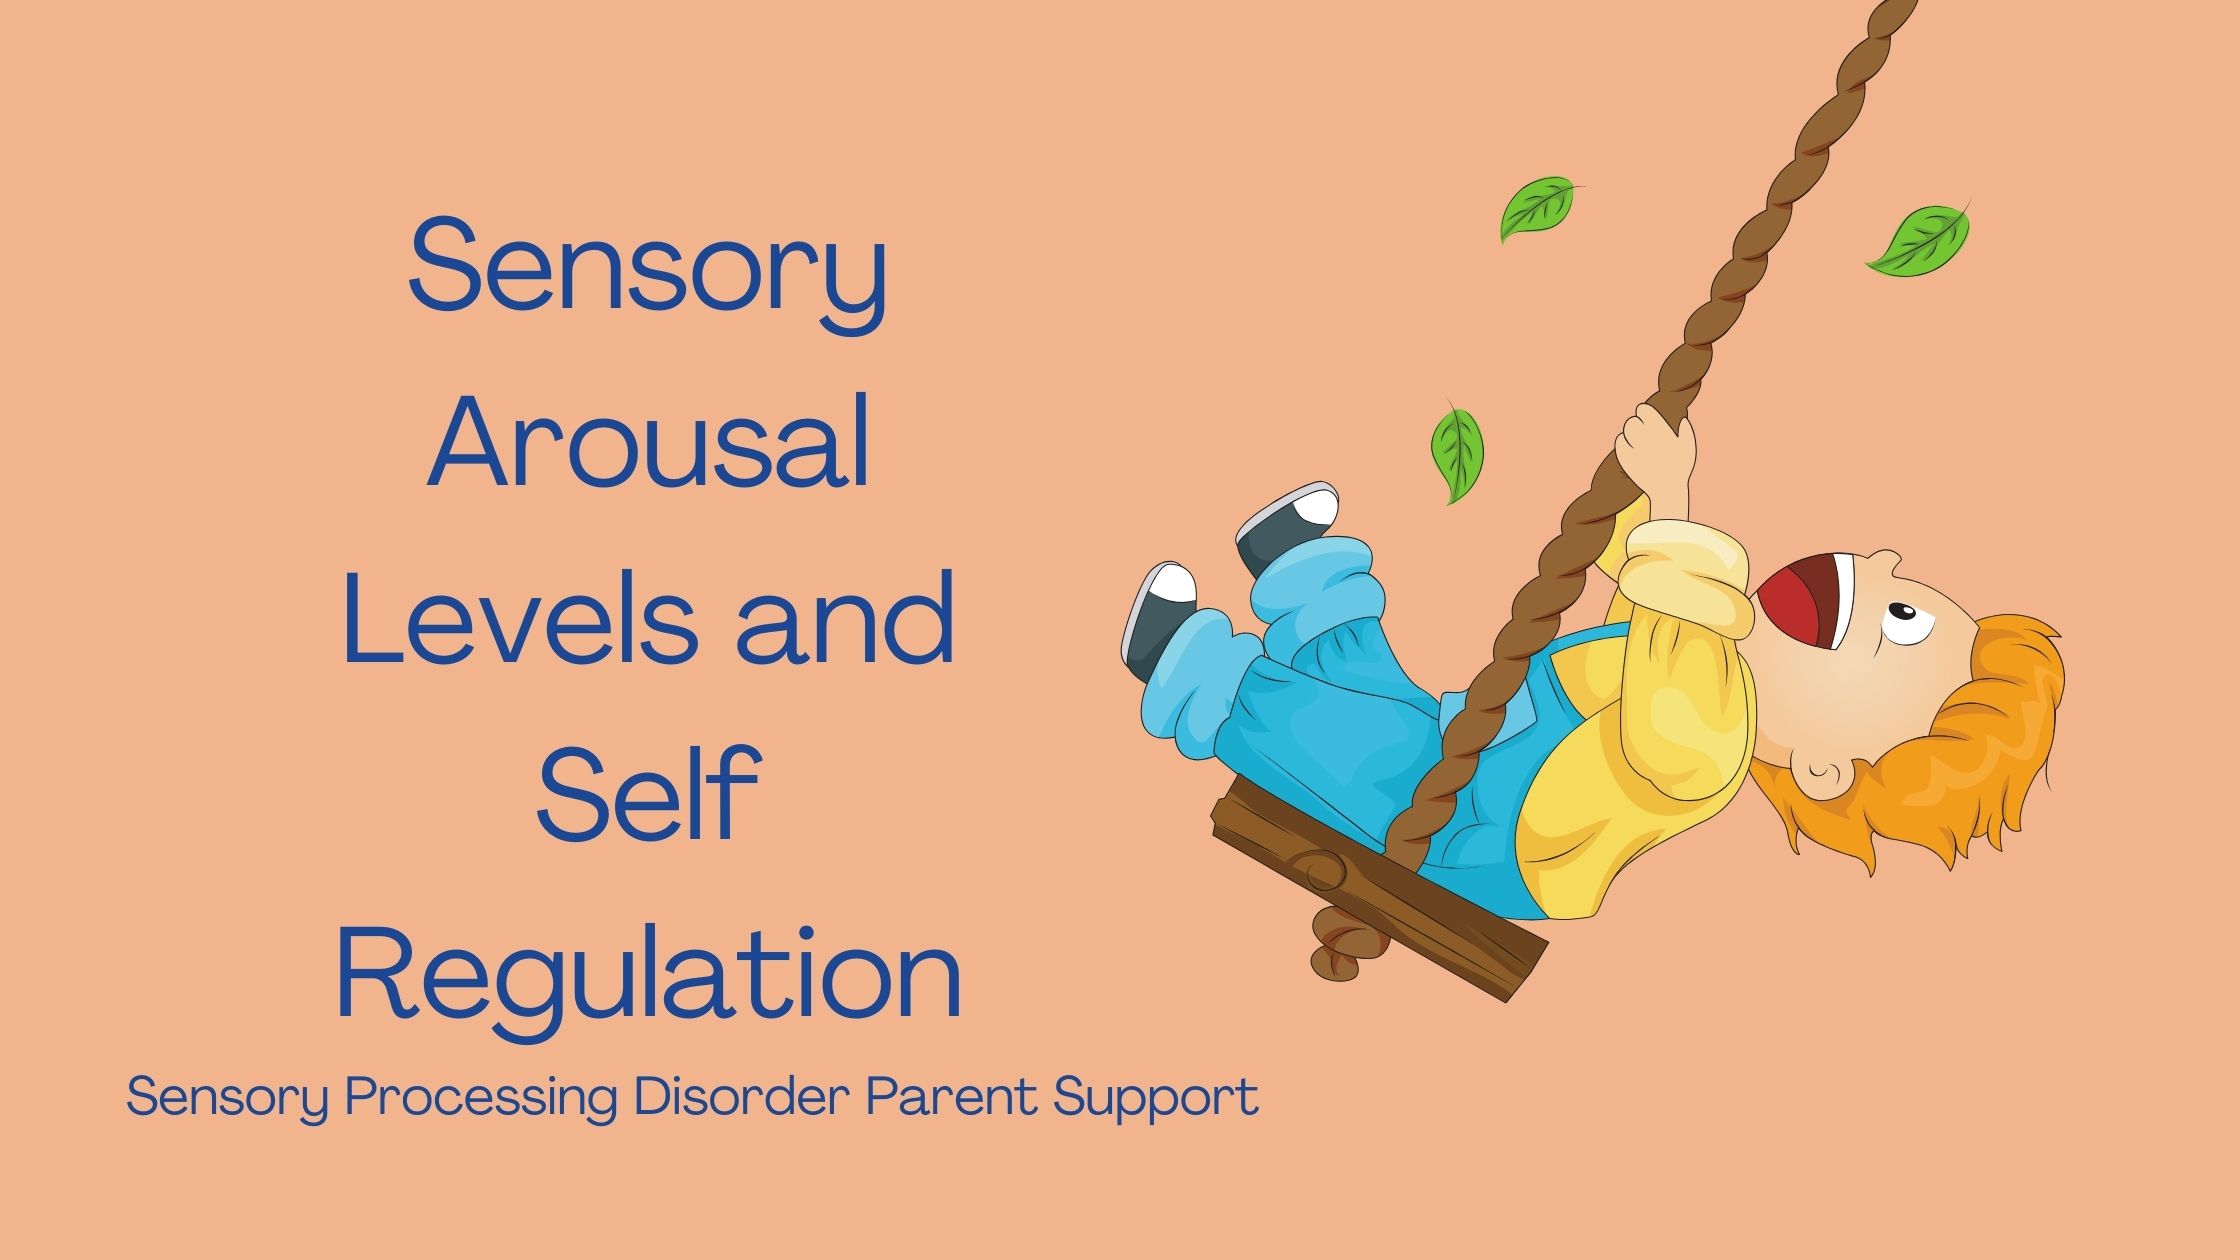 Boy with sensory processing disorder swinging on a sensory swing Sensory Arousal Levels and Self Regulation